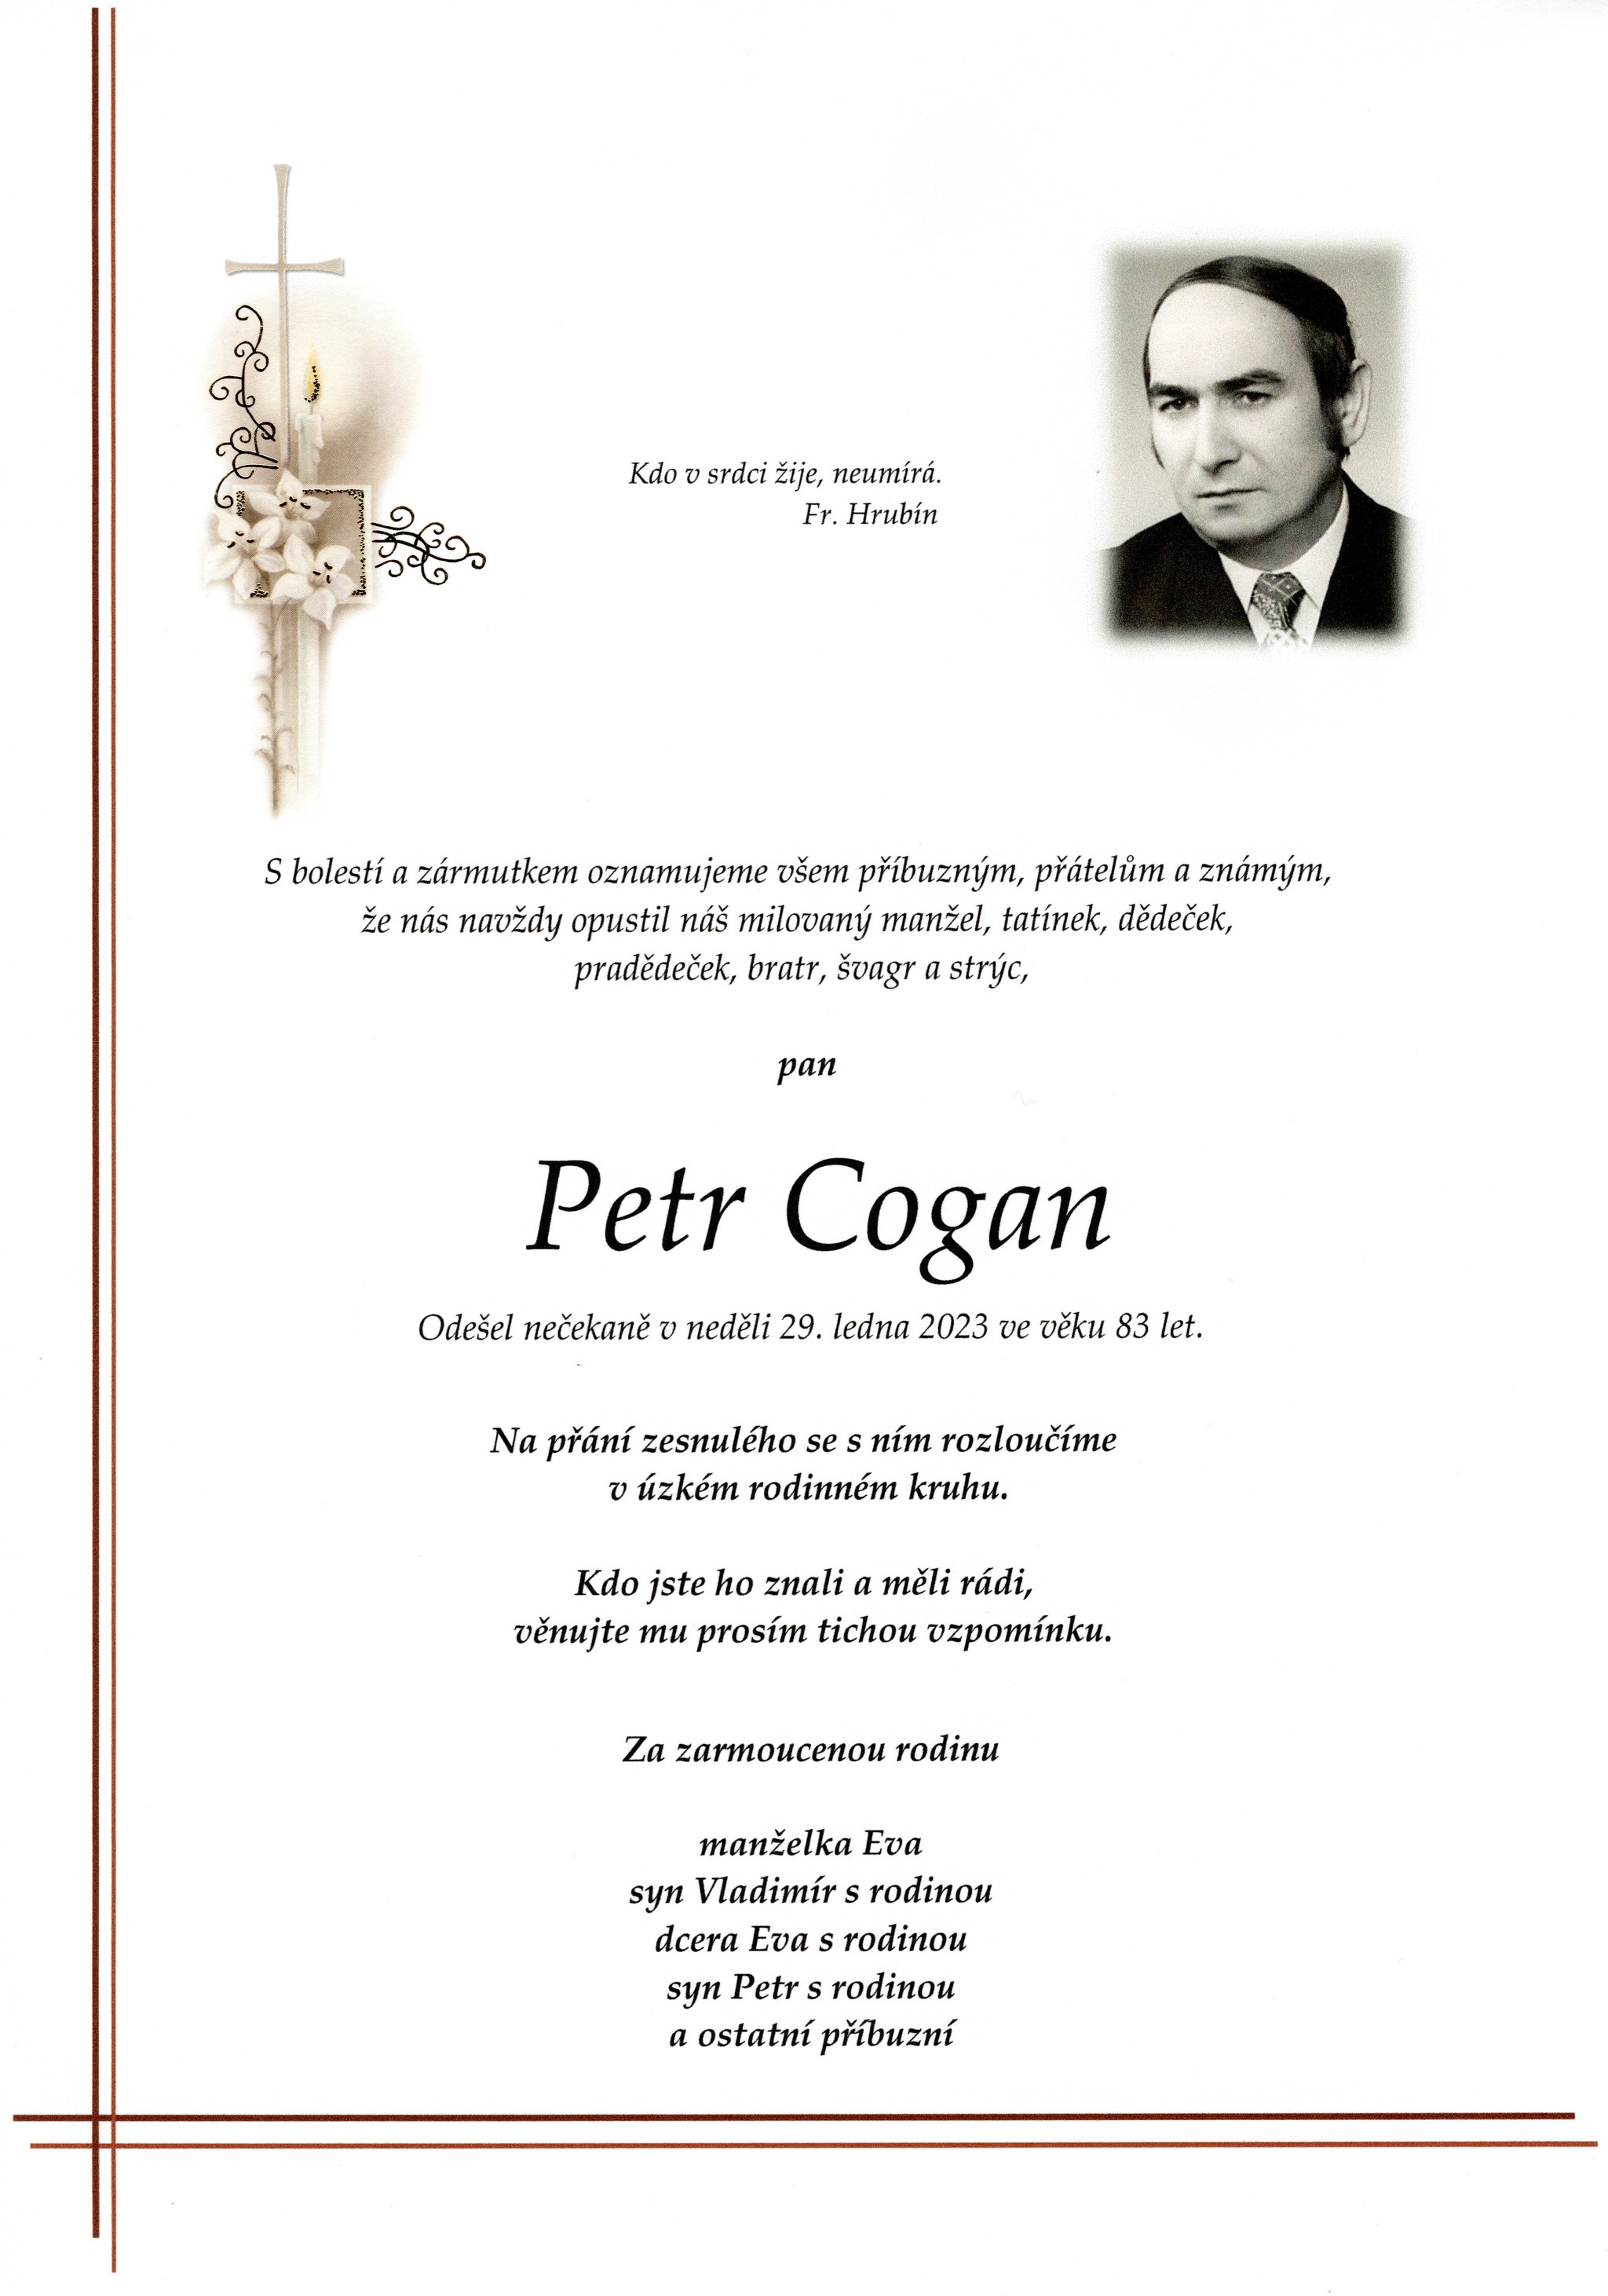 Petr Cogan